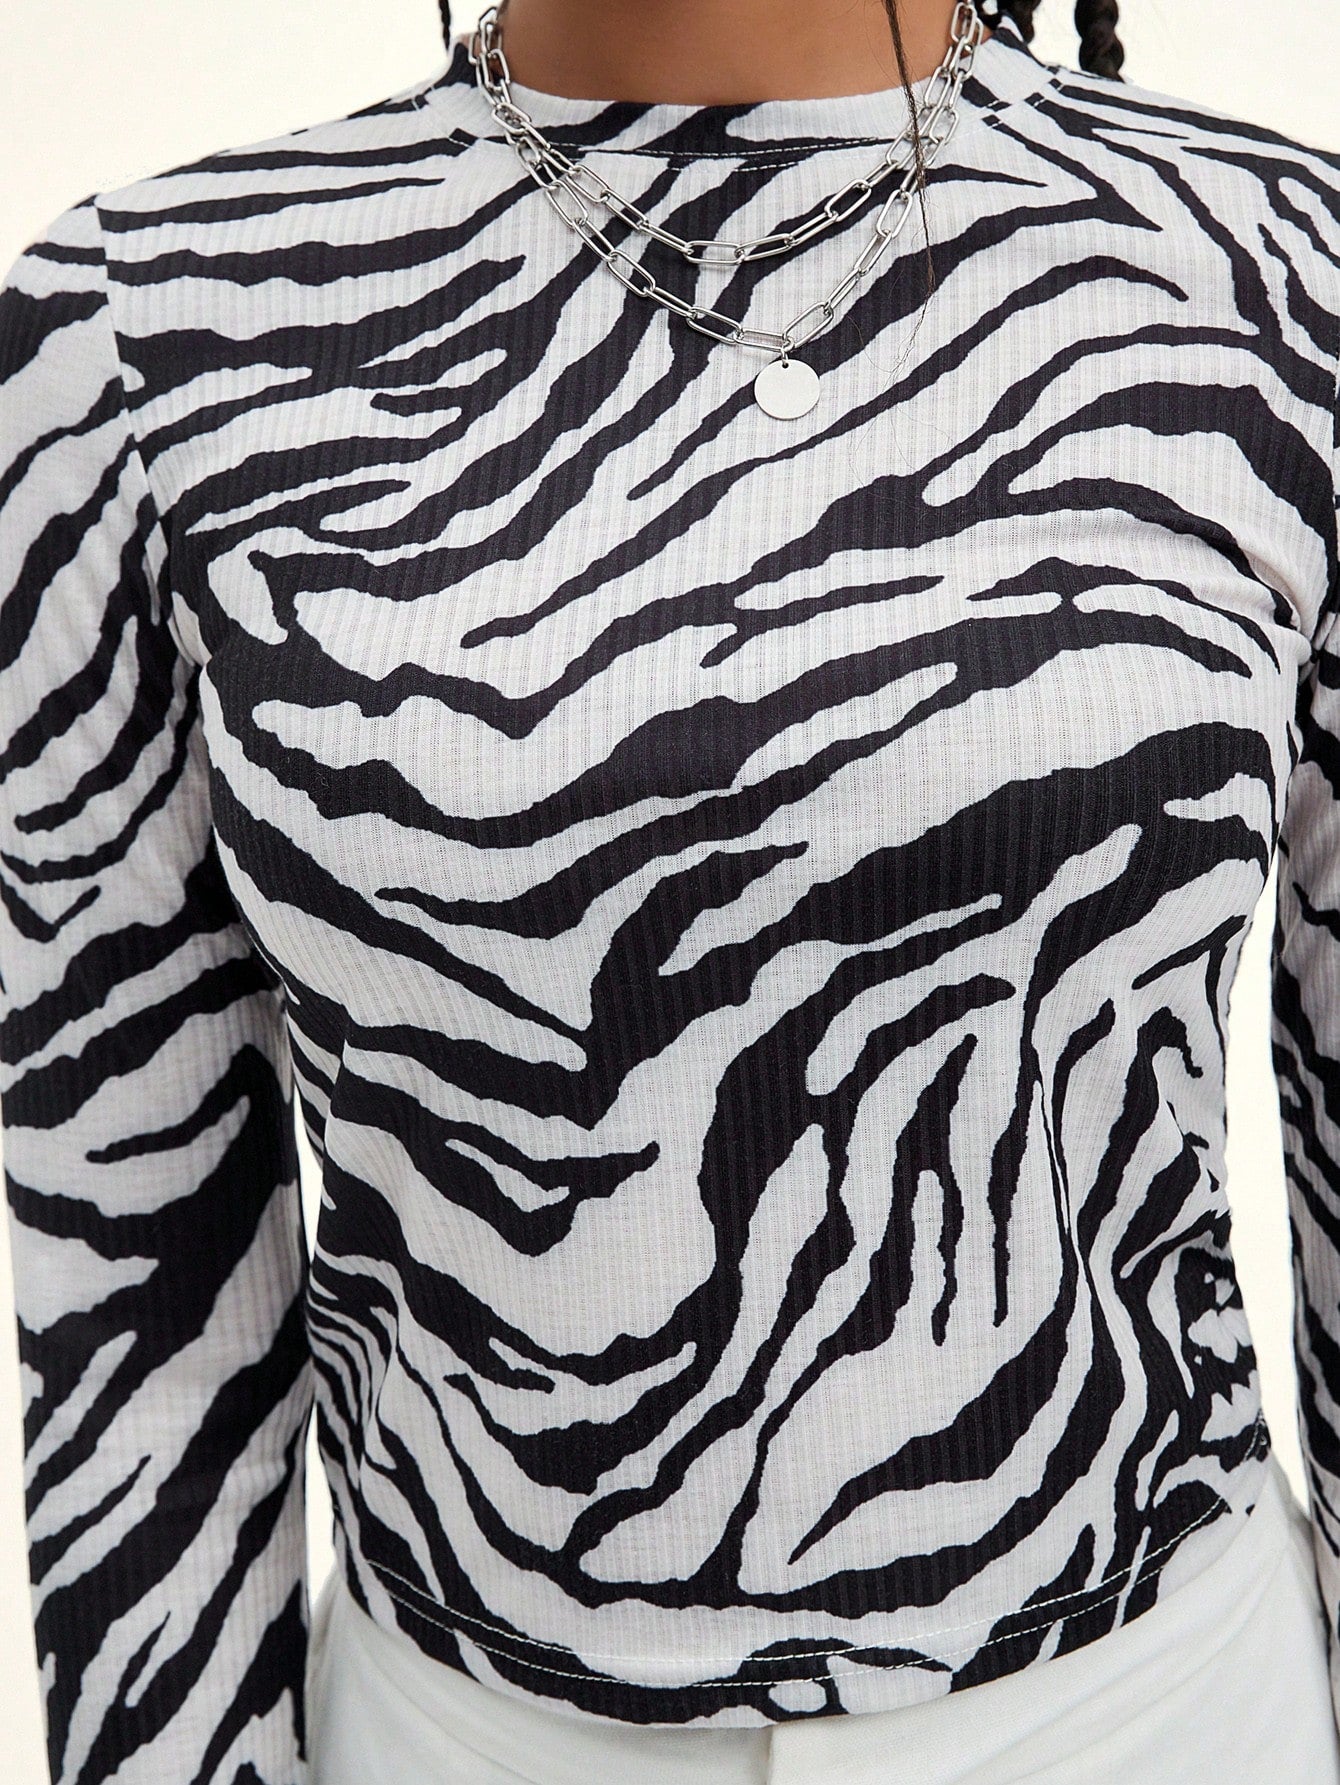 Zebra Striped Ribbed Knit Tee